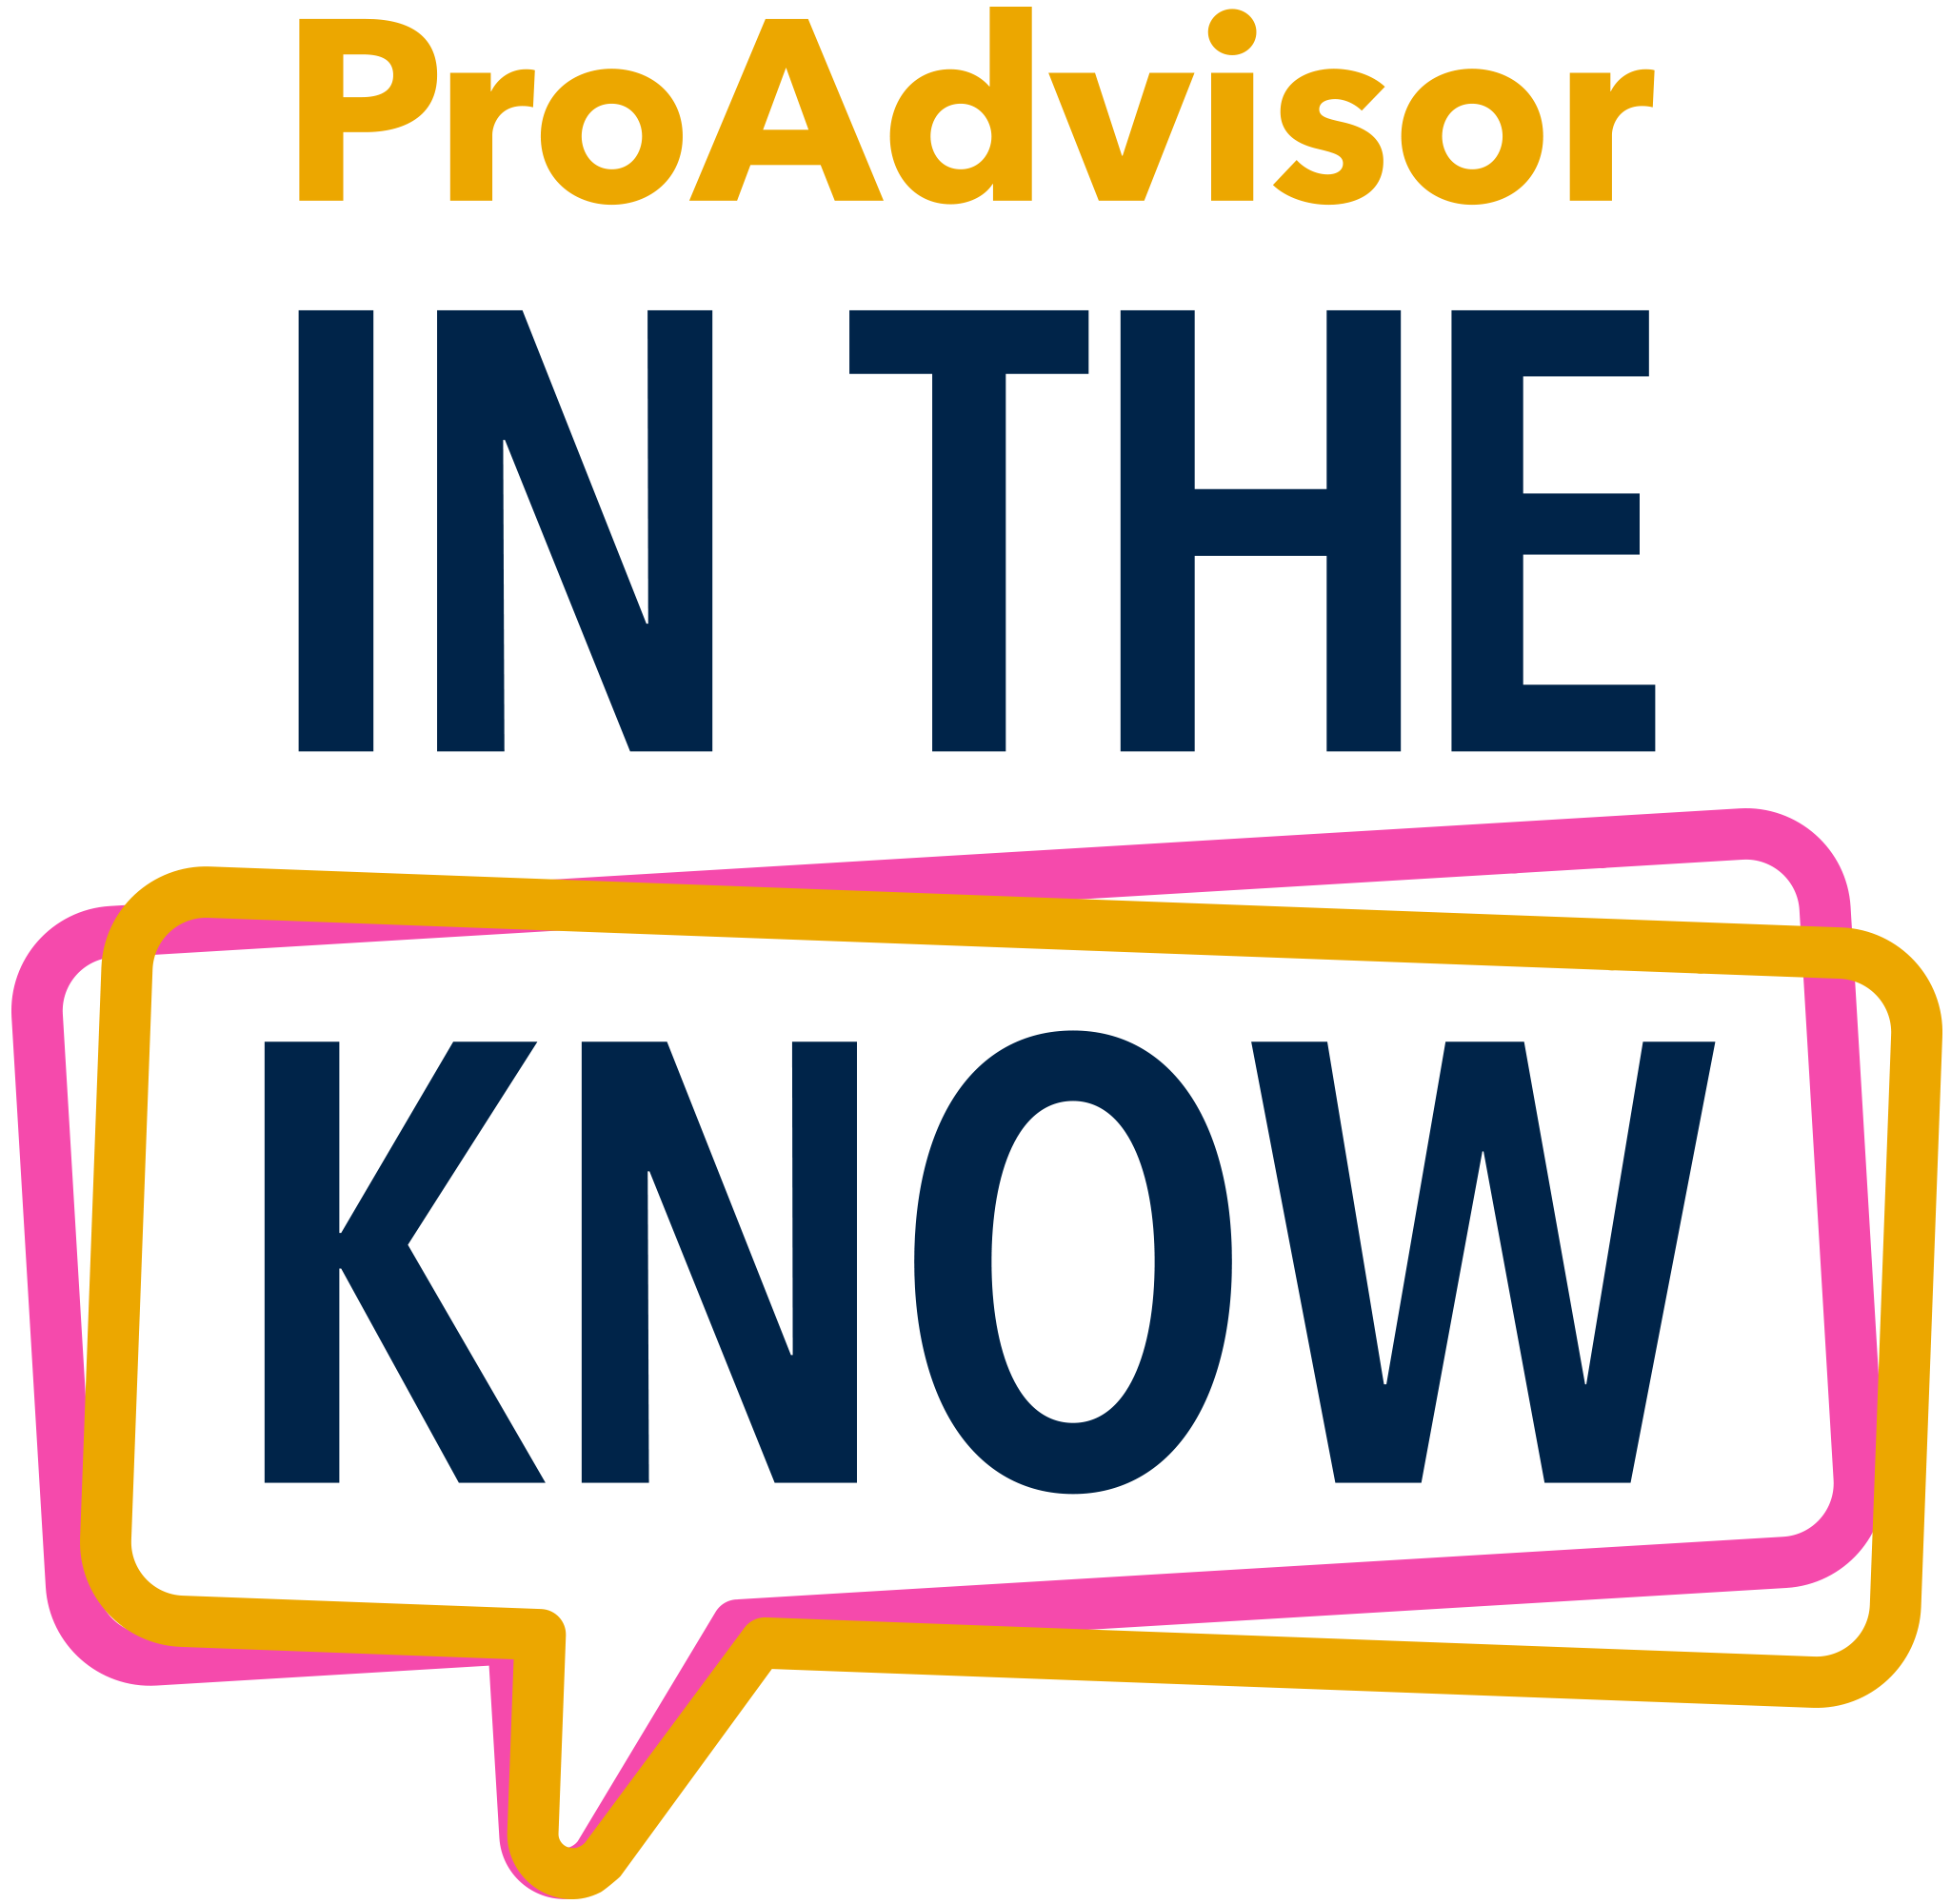 ProAdvisor In the Know logo